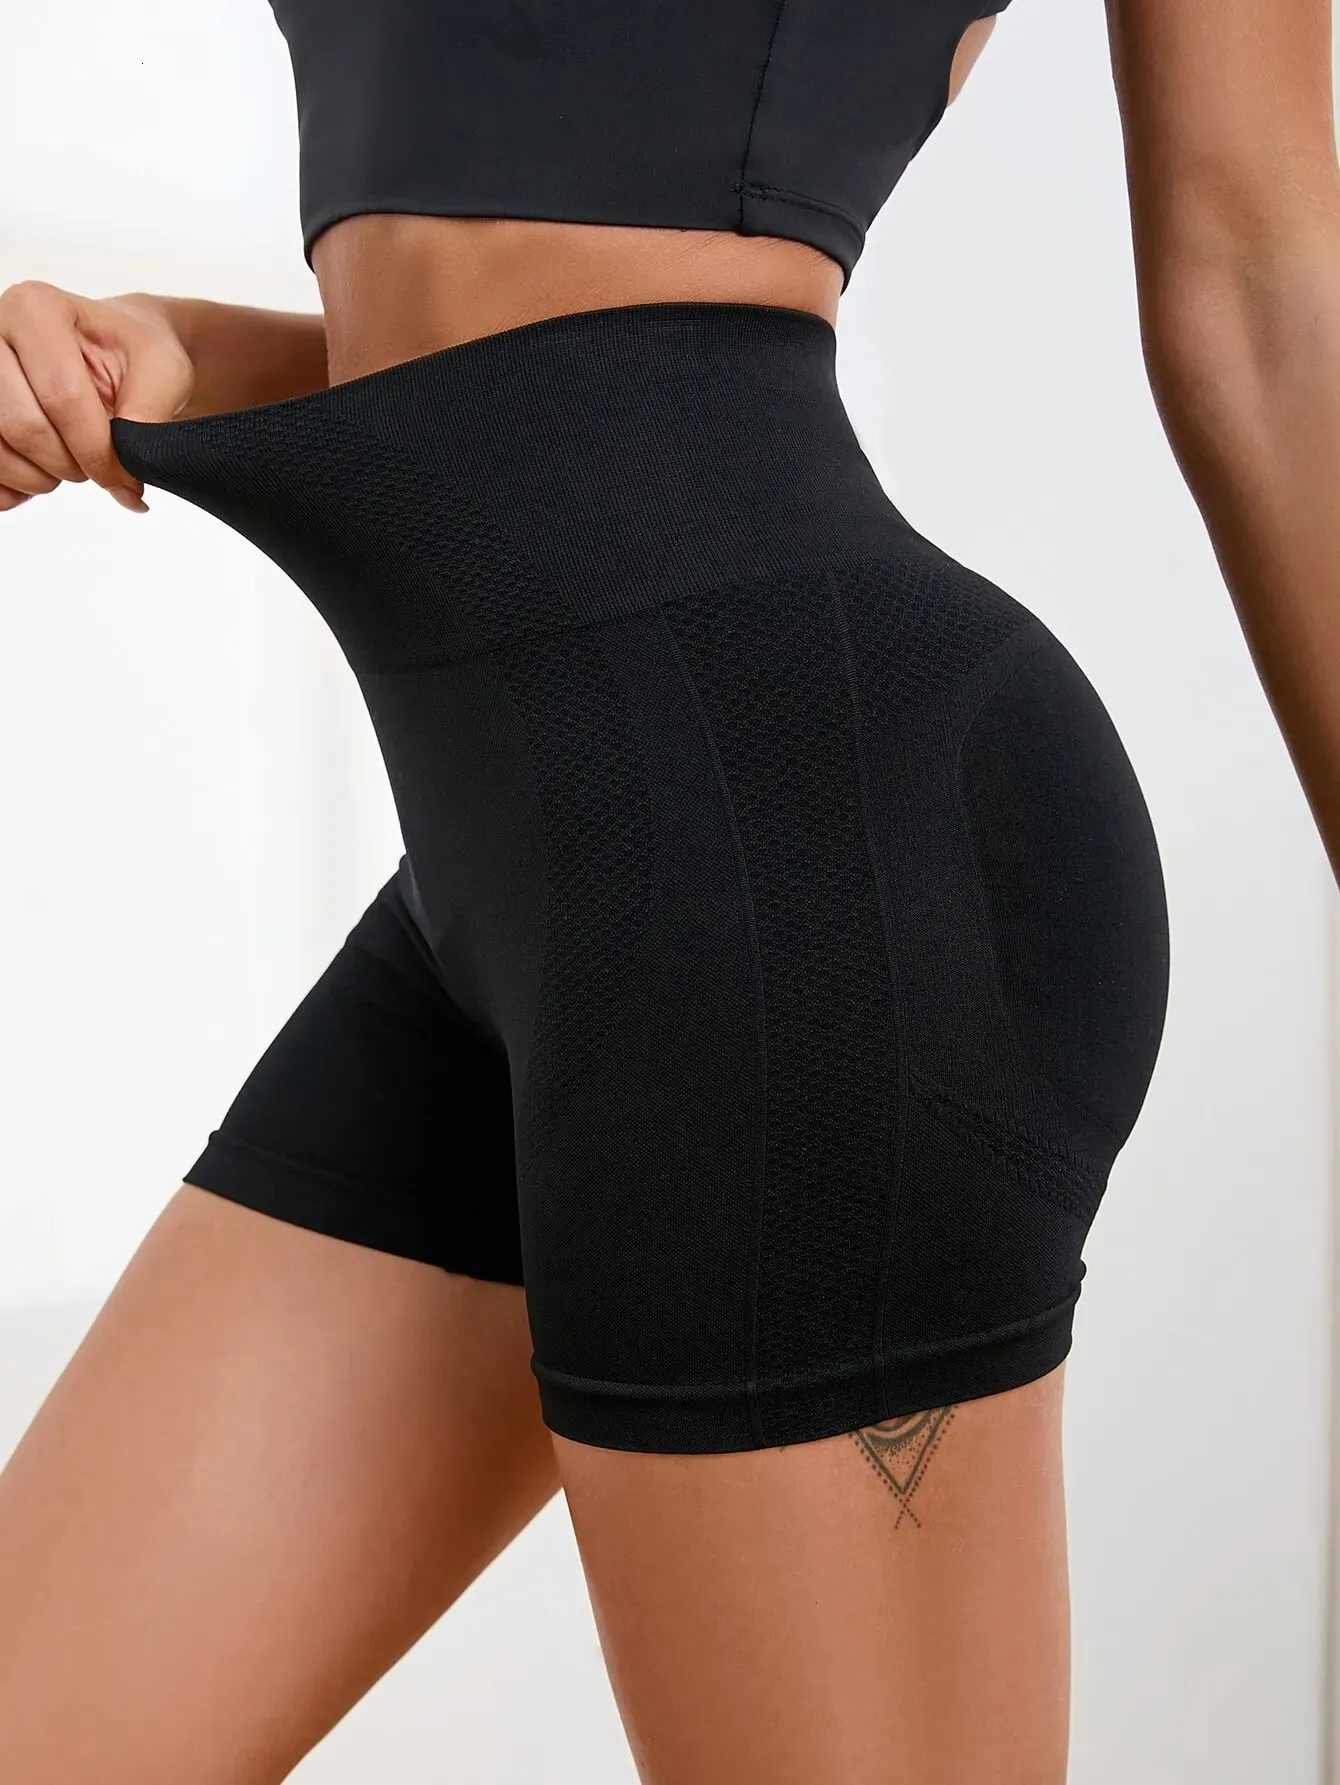 Yoga Outfit Women Yoga Shorts Fitness Seamless Push Up Trainning Qucik Dry Sportwear Shorts Casual Tummy Control Gym Cycling Shorts Female 231202